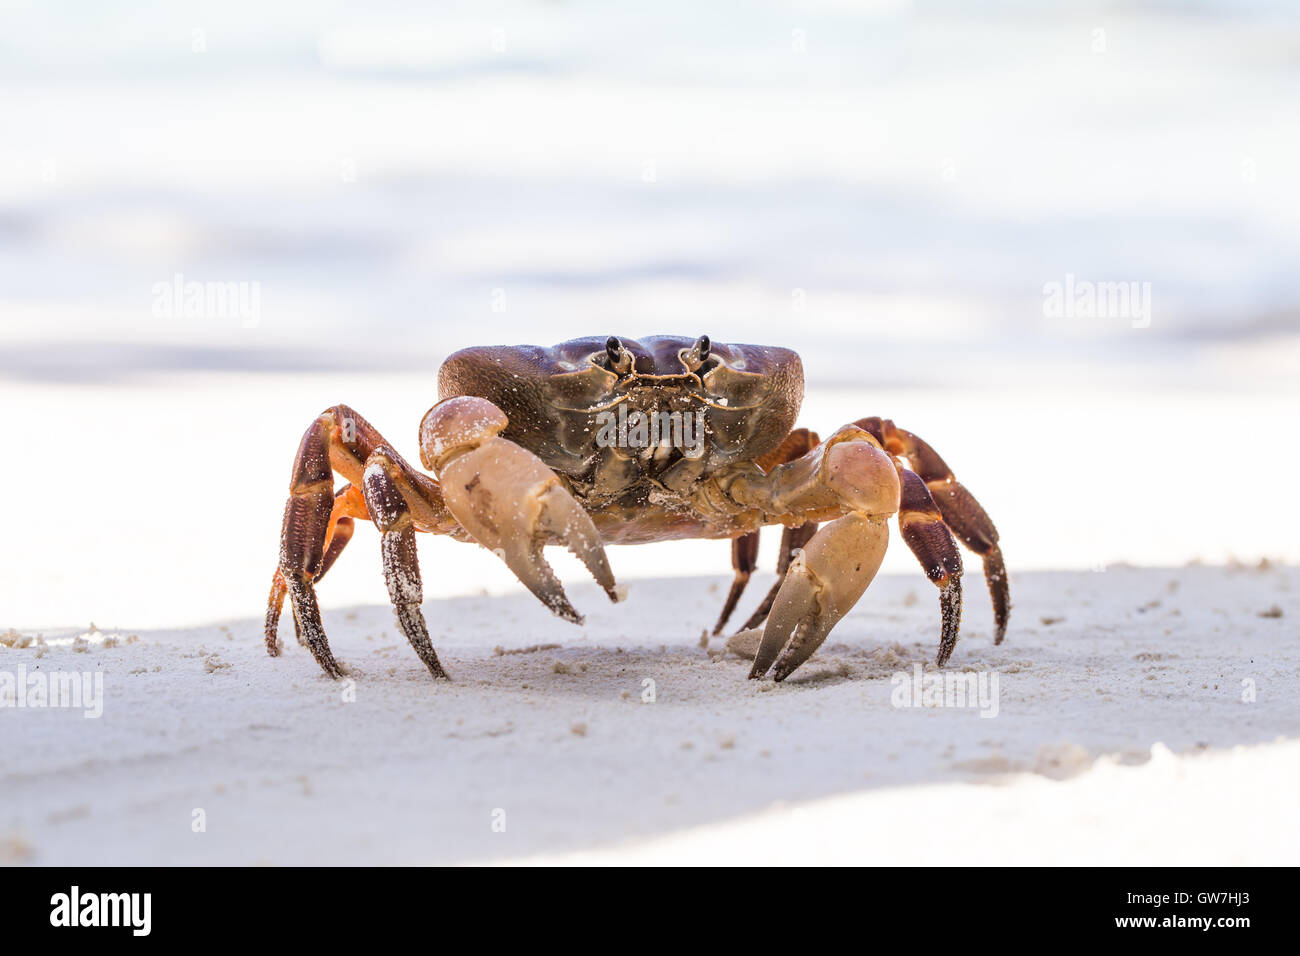 Hairy leg mountain crab, Tachai island, Phang Nga Province, Thailand Stock Photo